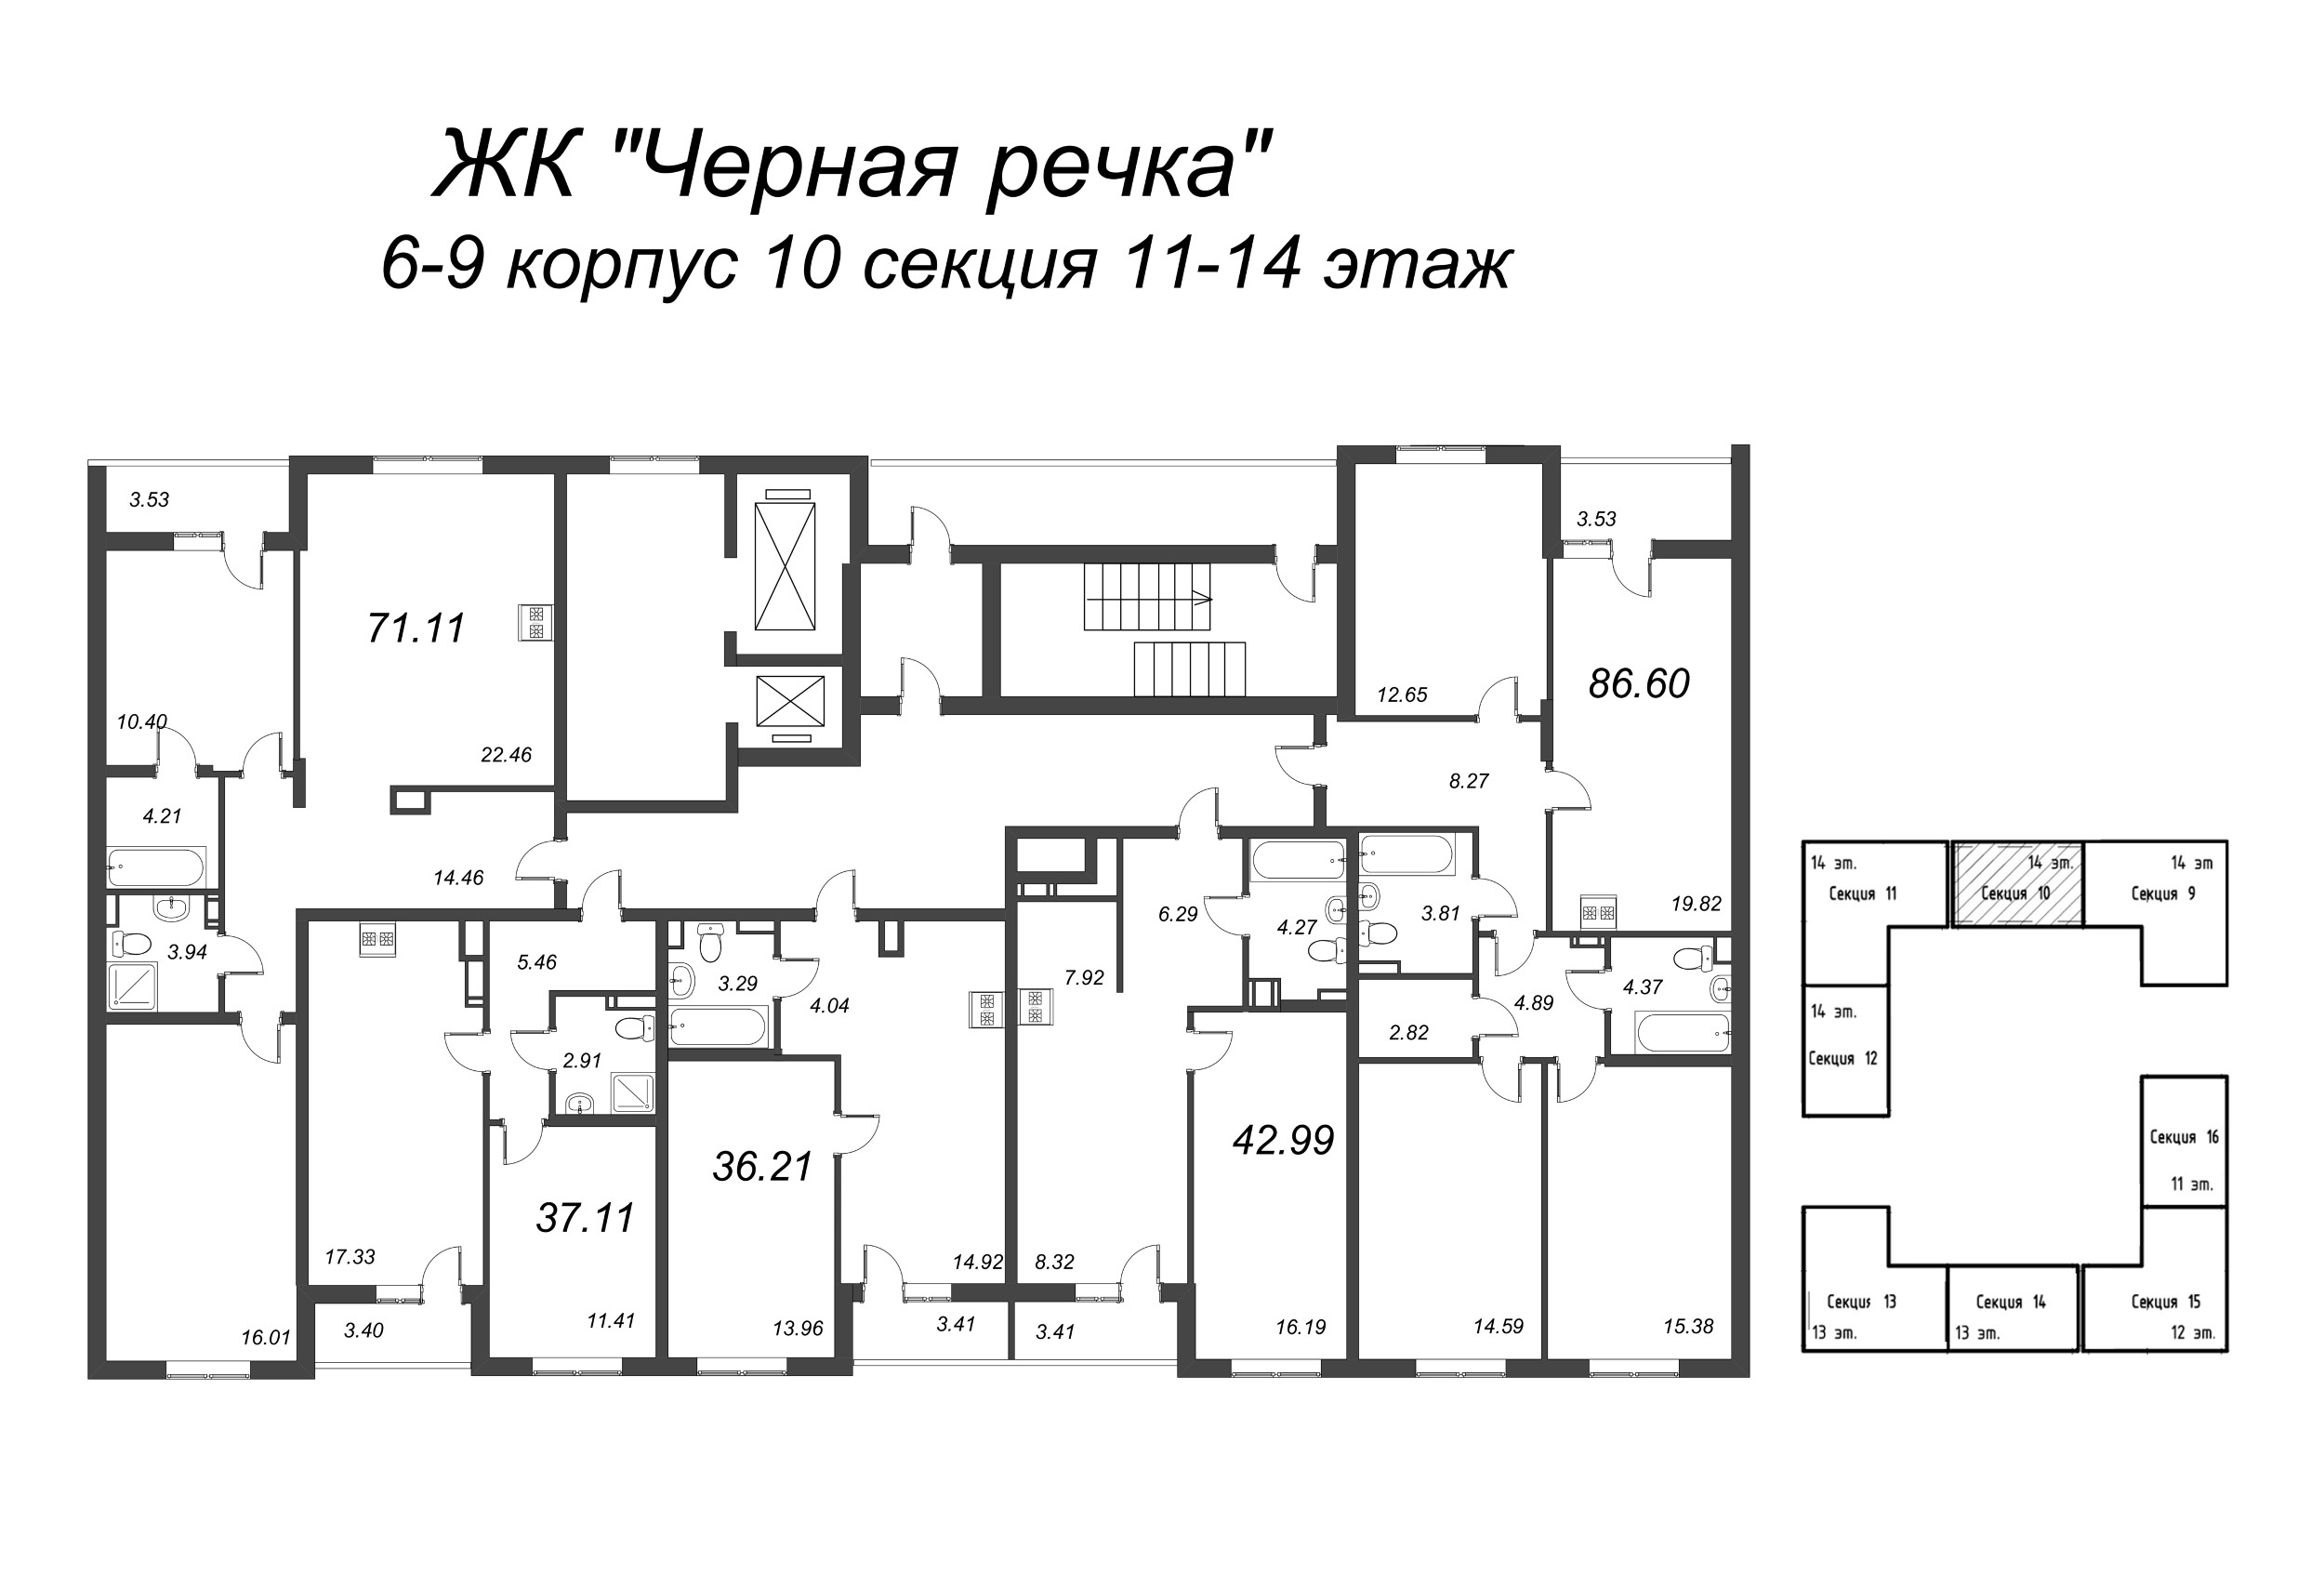 2-комнатная (Евро) квартира, 36.21 м² в ЖК "Чёрная речка от Ильича" - планировка этажа